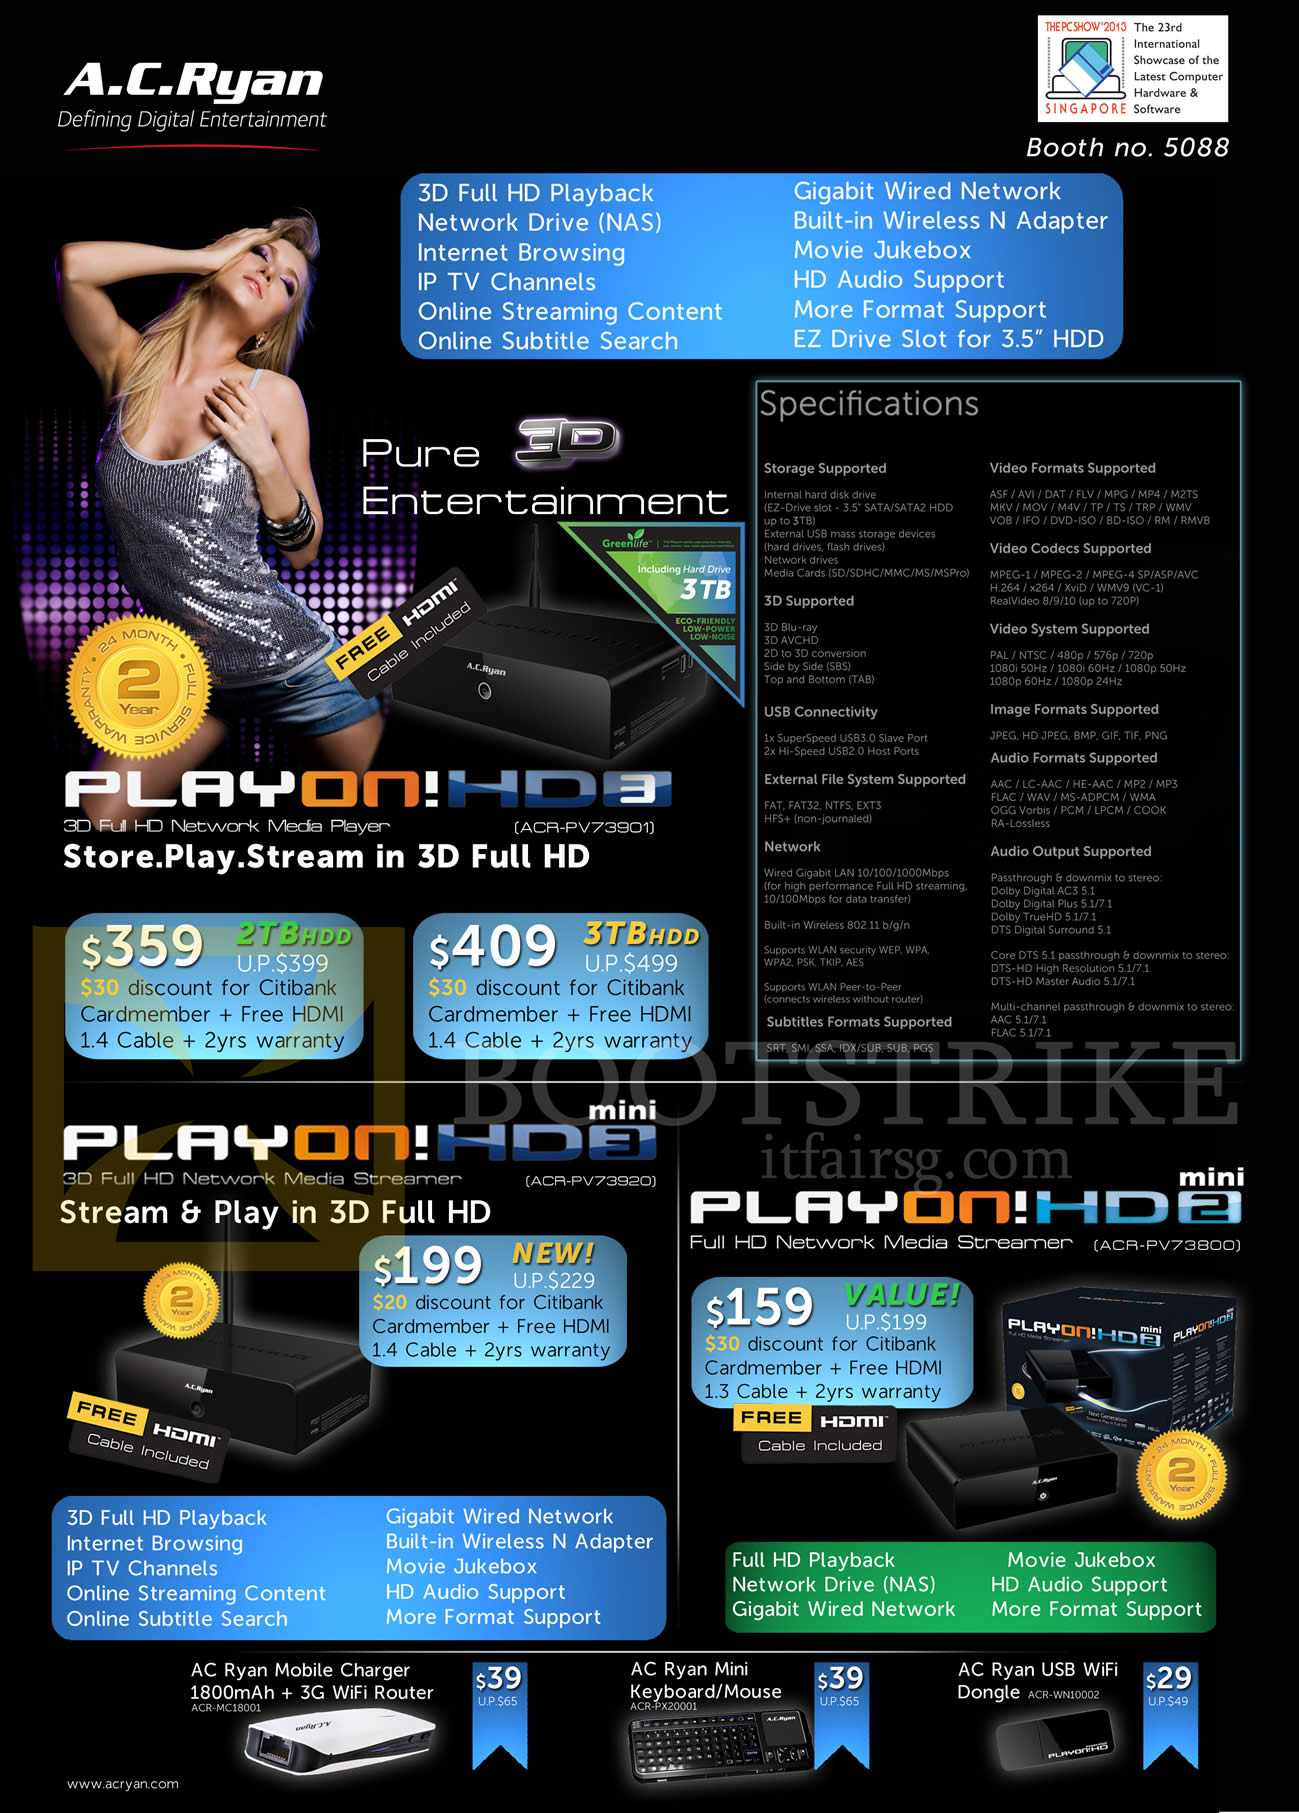 PC SHOW 2013 price list image brochure of AC Ryan Media Players Playon HD3 ACR-PV73901, Playon HD3 Mini PV73920, Playon HD2 Mini PV73800